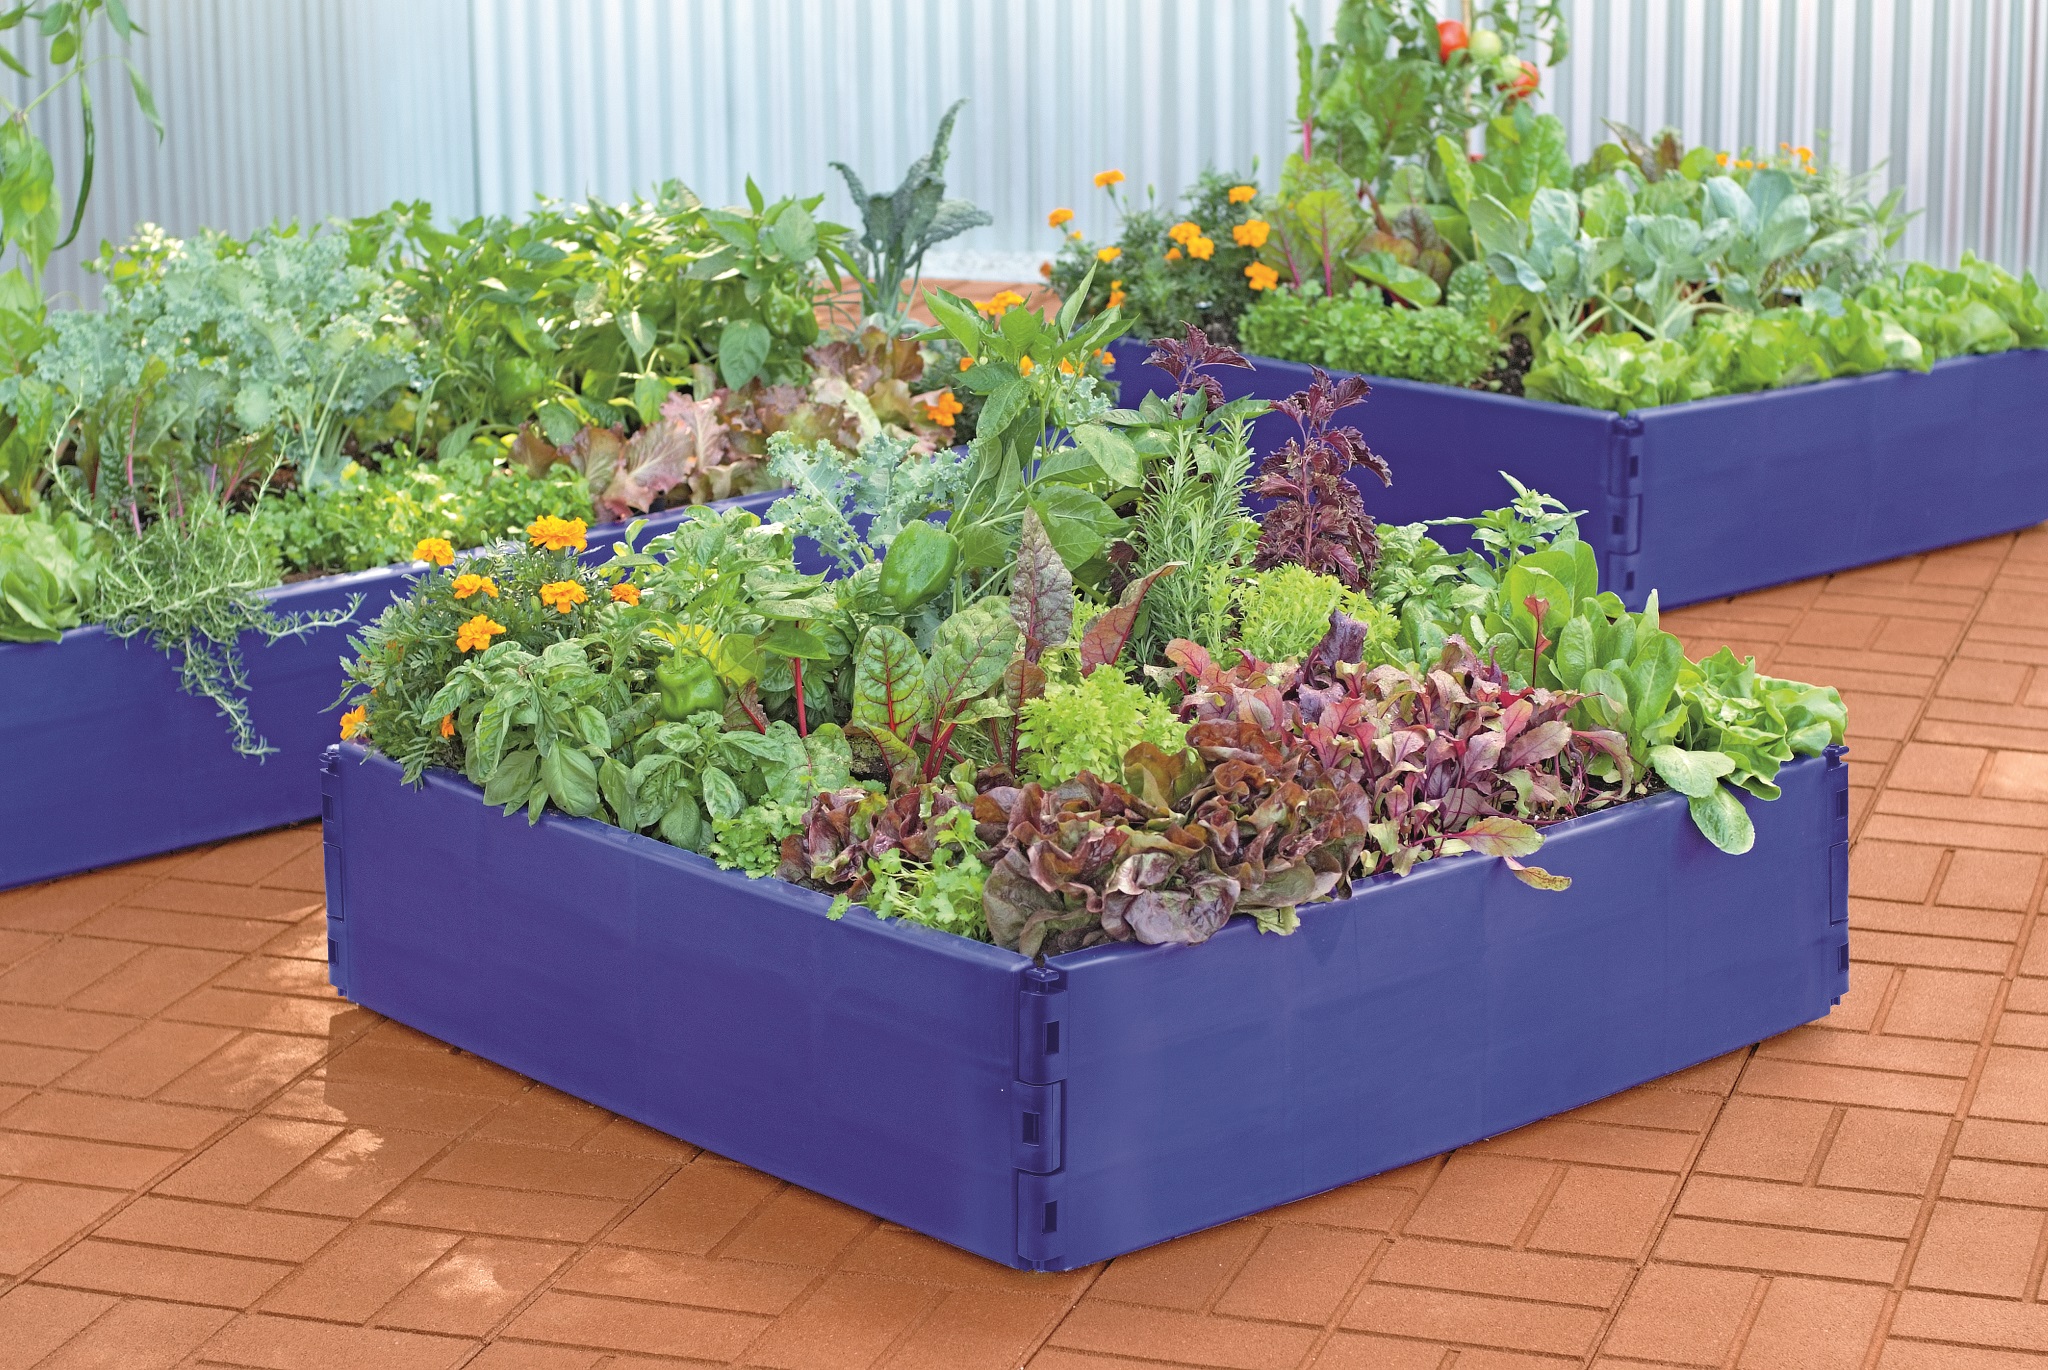 Garden Grow Bag Indoor Outdoor Garden Plant Bed for Plants,Vegetables,Flowers. MATTAWA Raised Garden Bed Deeper Version-4 Planter Boxes